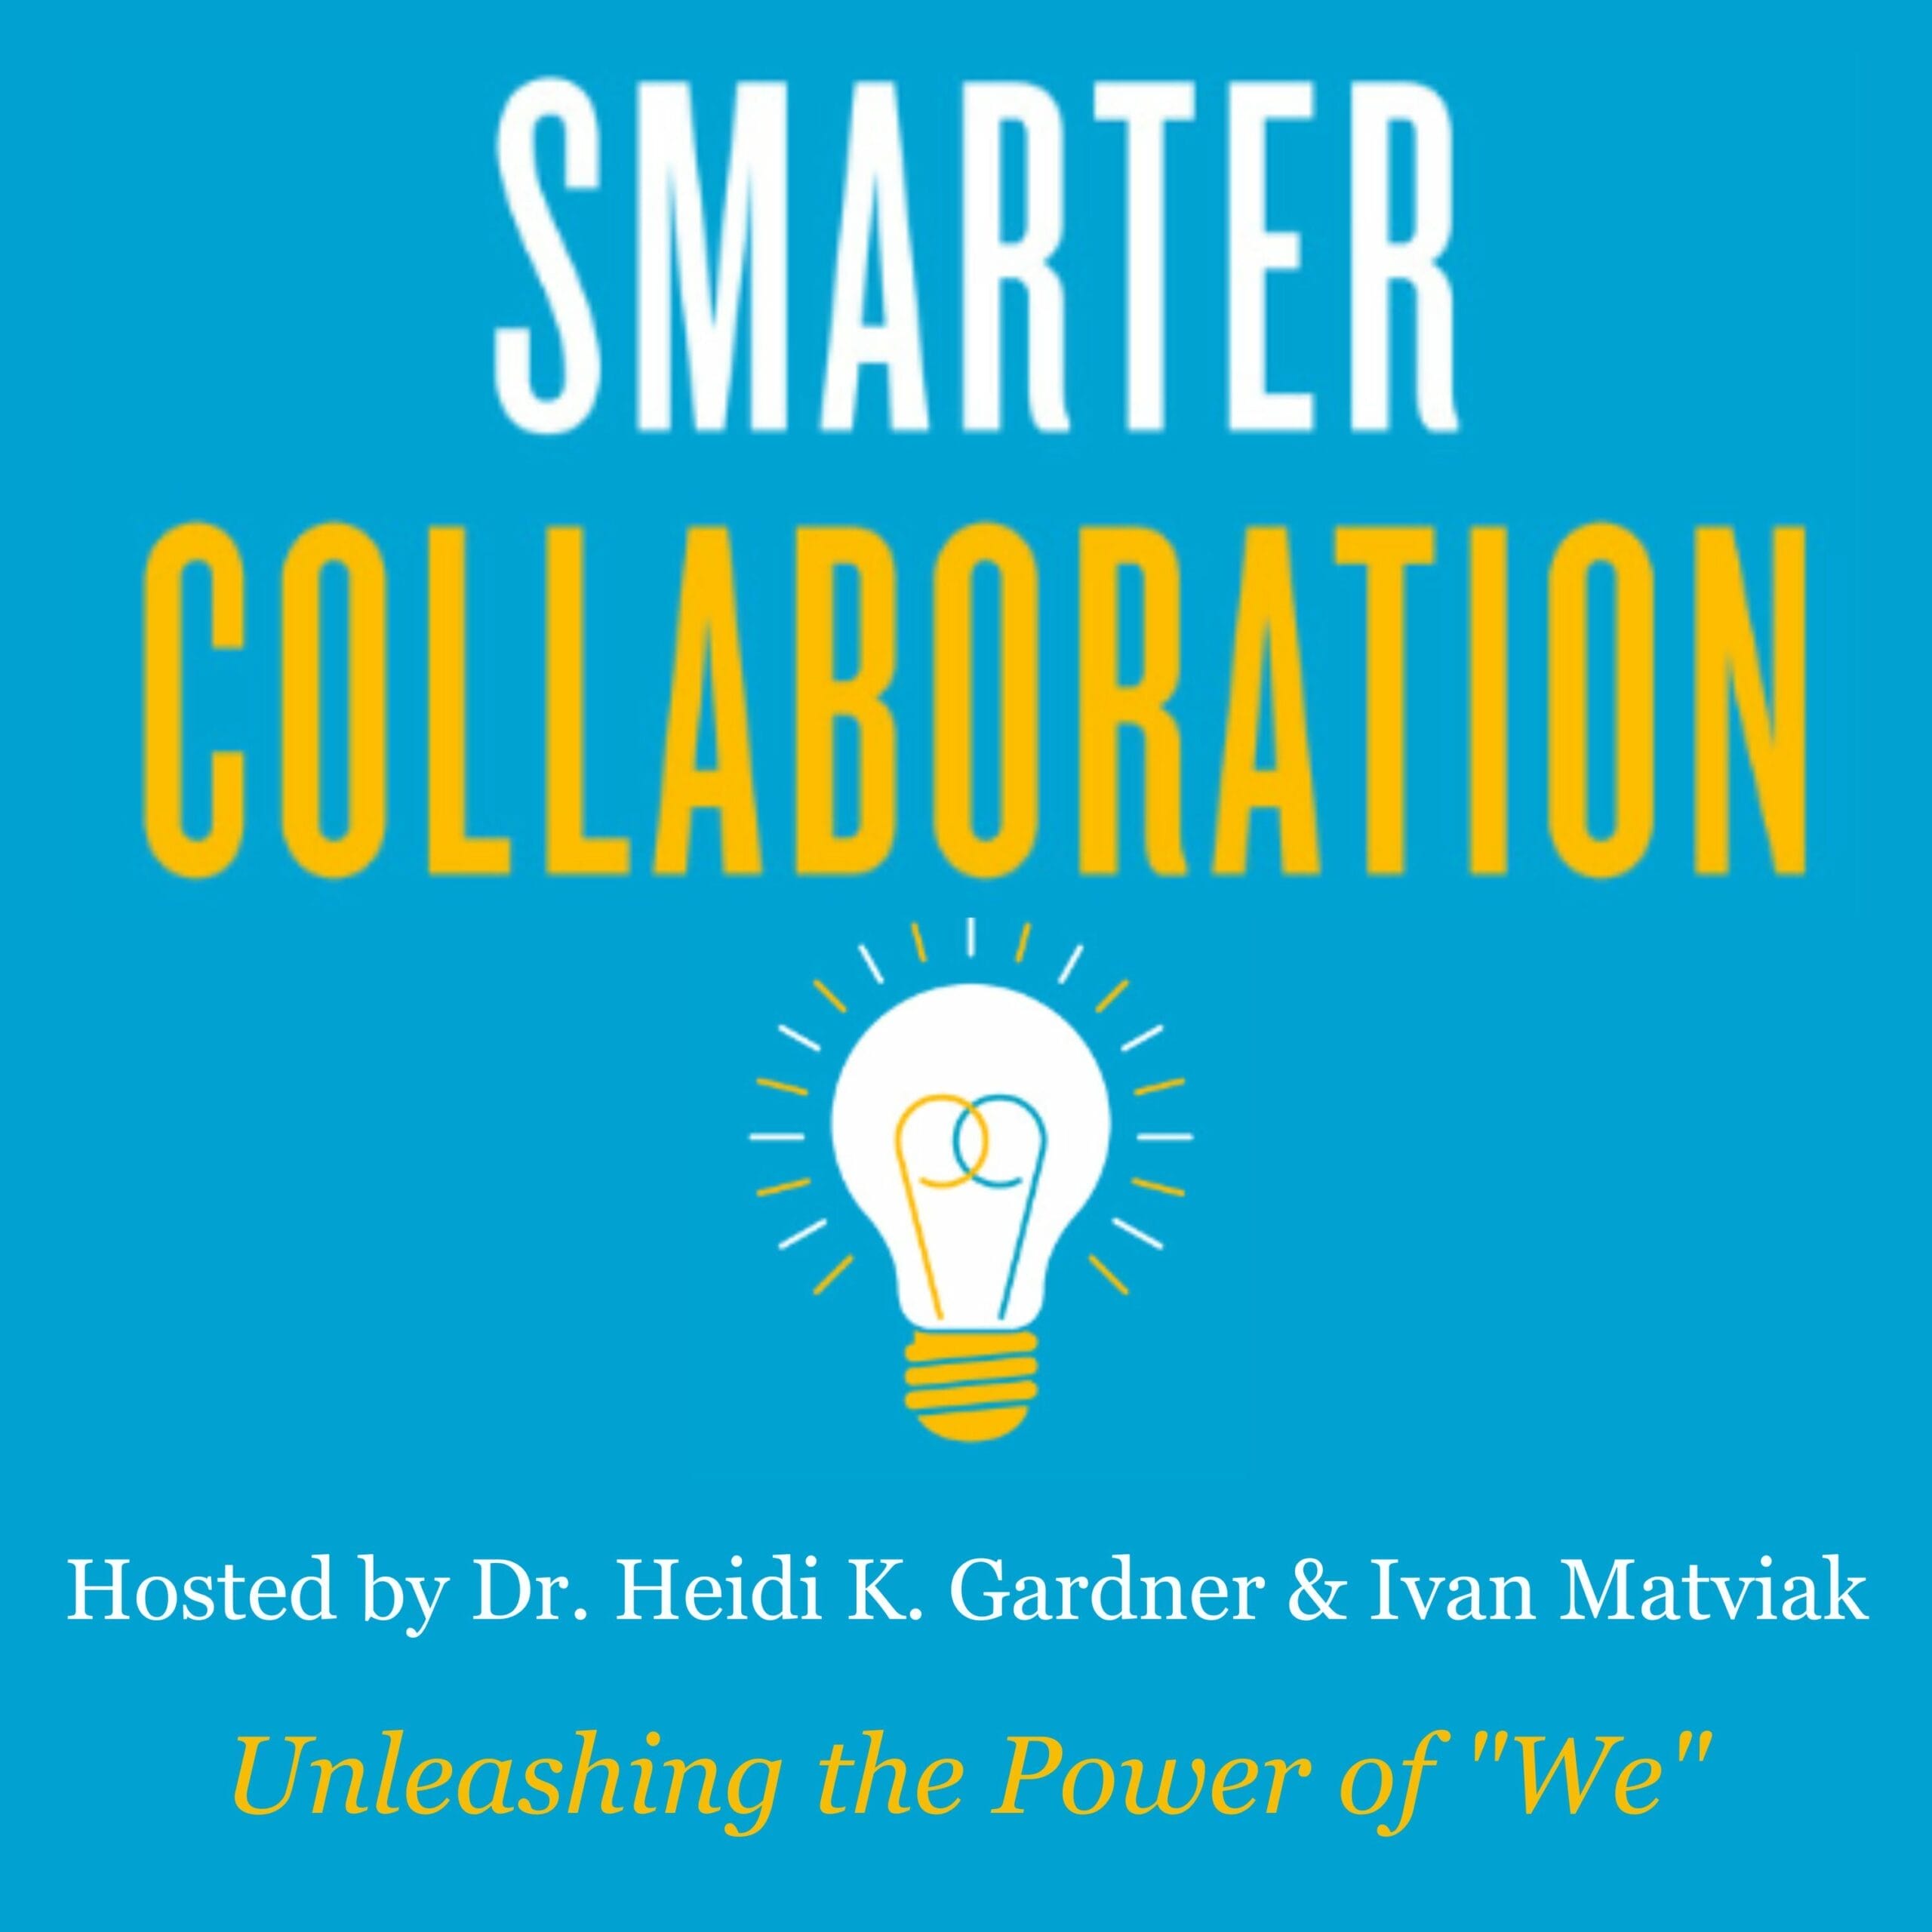 Smarter Collaboration Podcast Logo